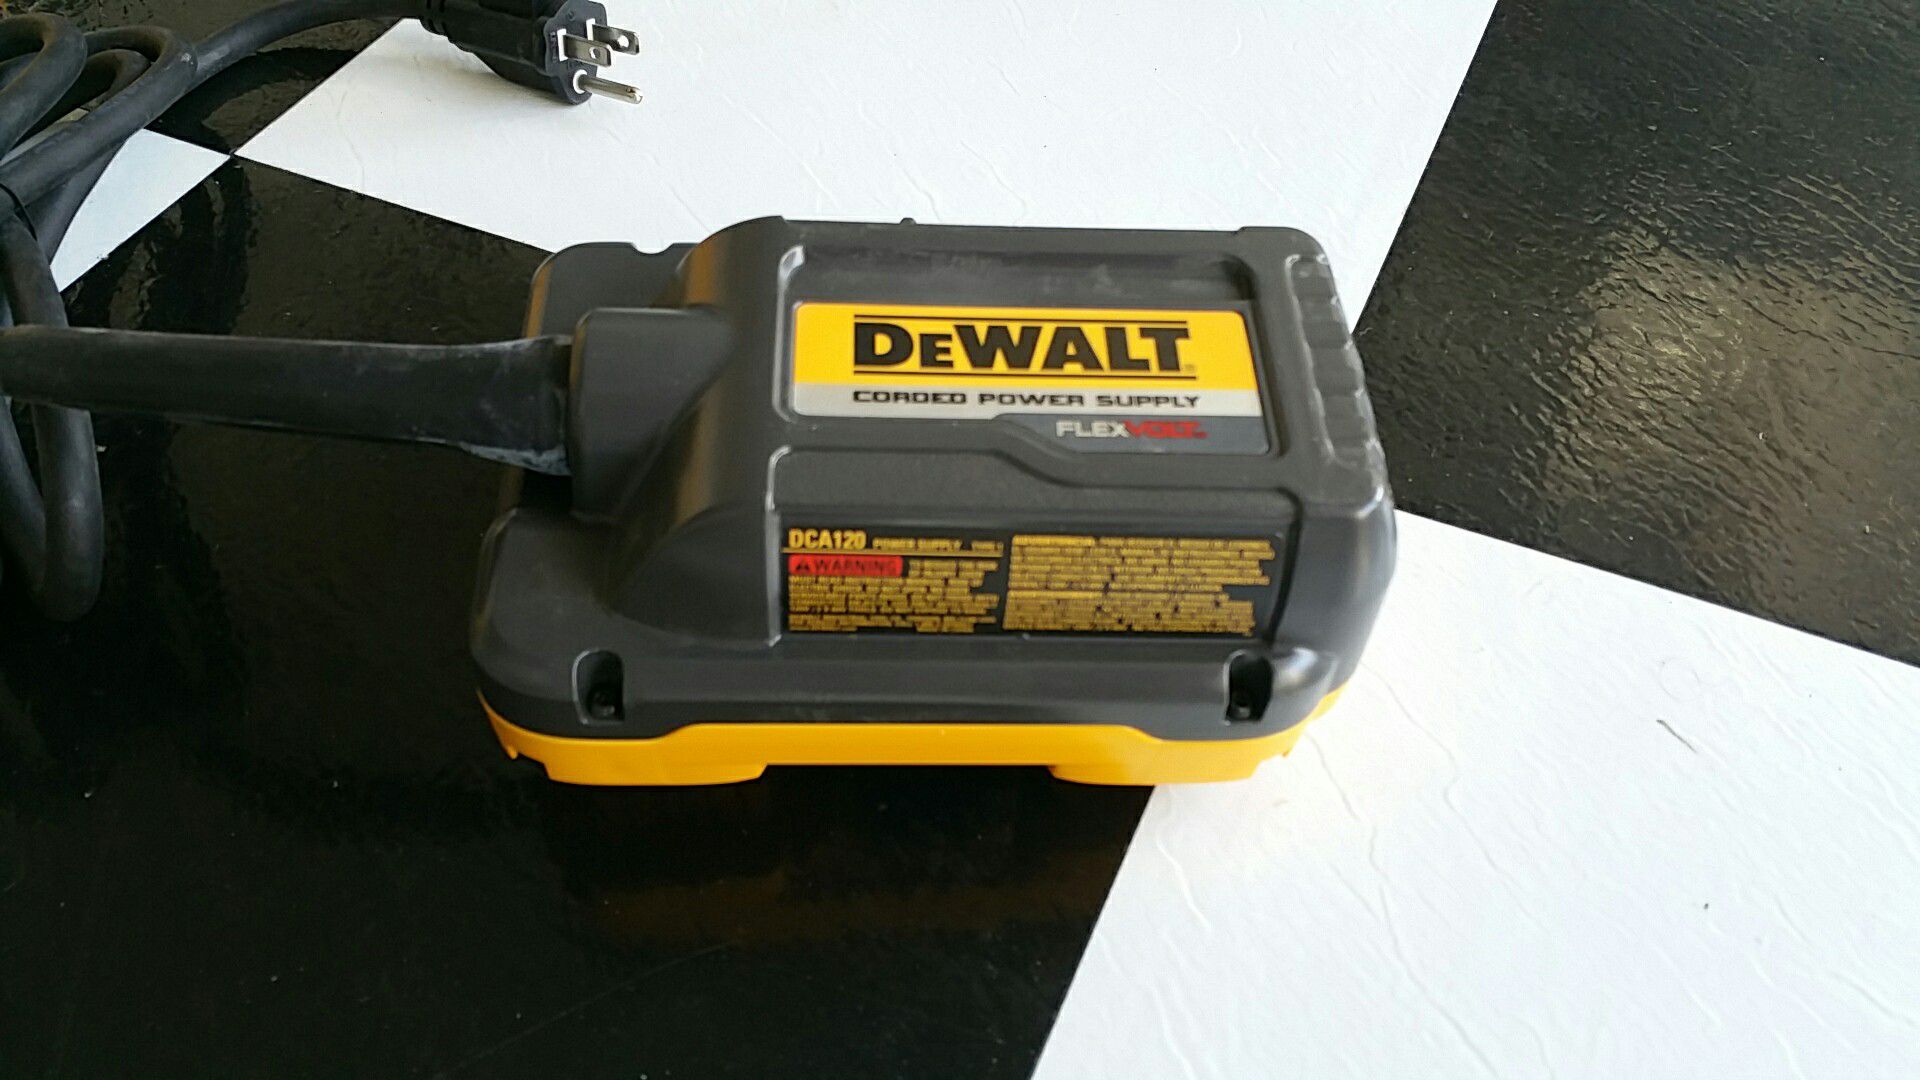 Dewalt Corded power supply for fexvolt Miter saw